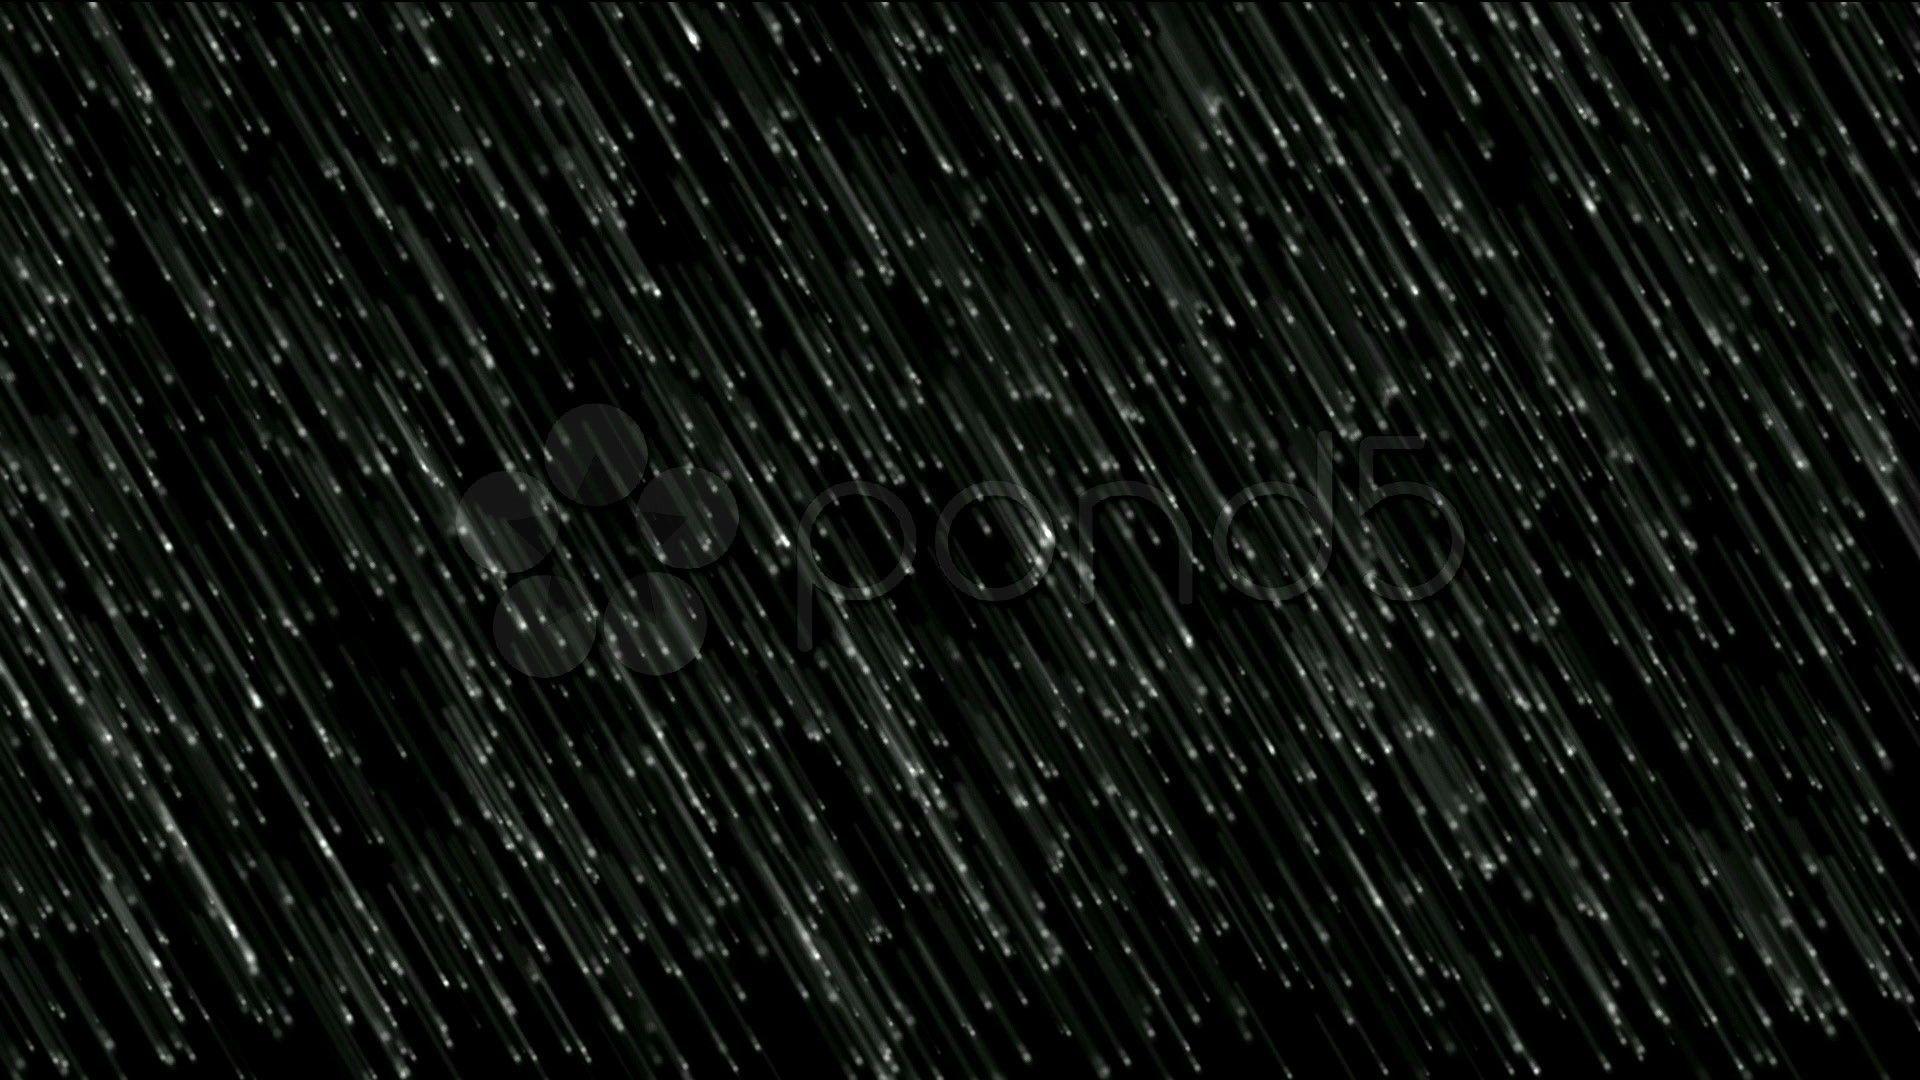 Rain effect. Дождь для фотошопа. Текстура дождя. Дождь на черном фоне. Эффект дождя.